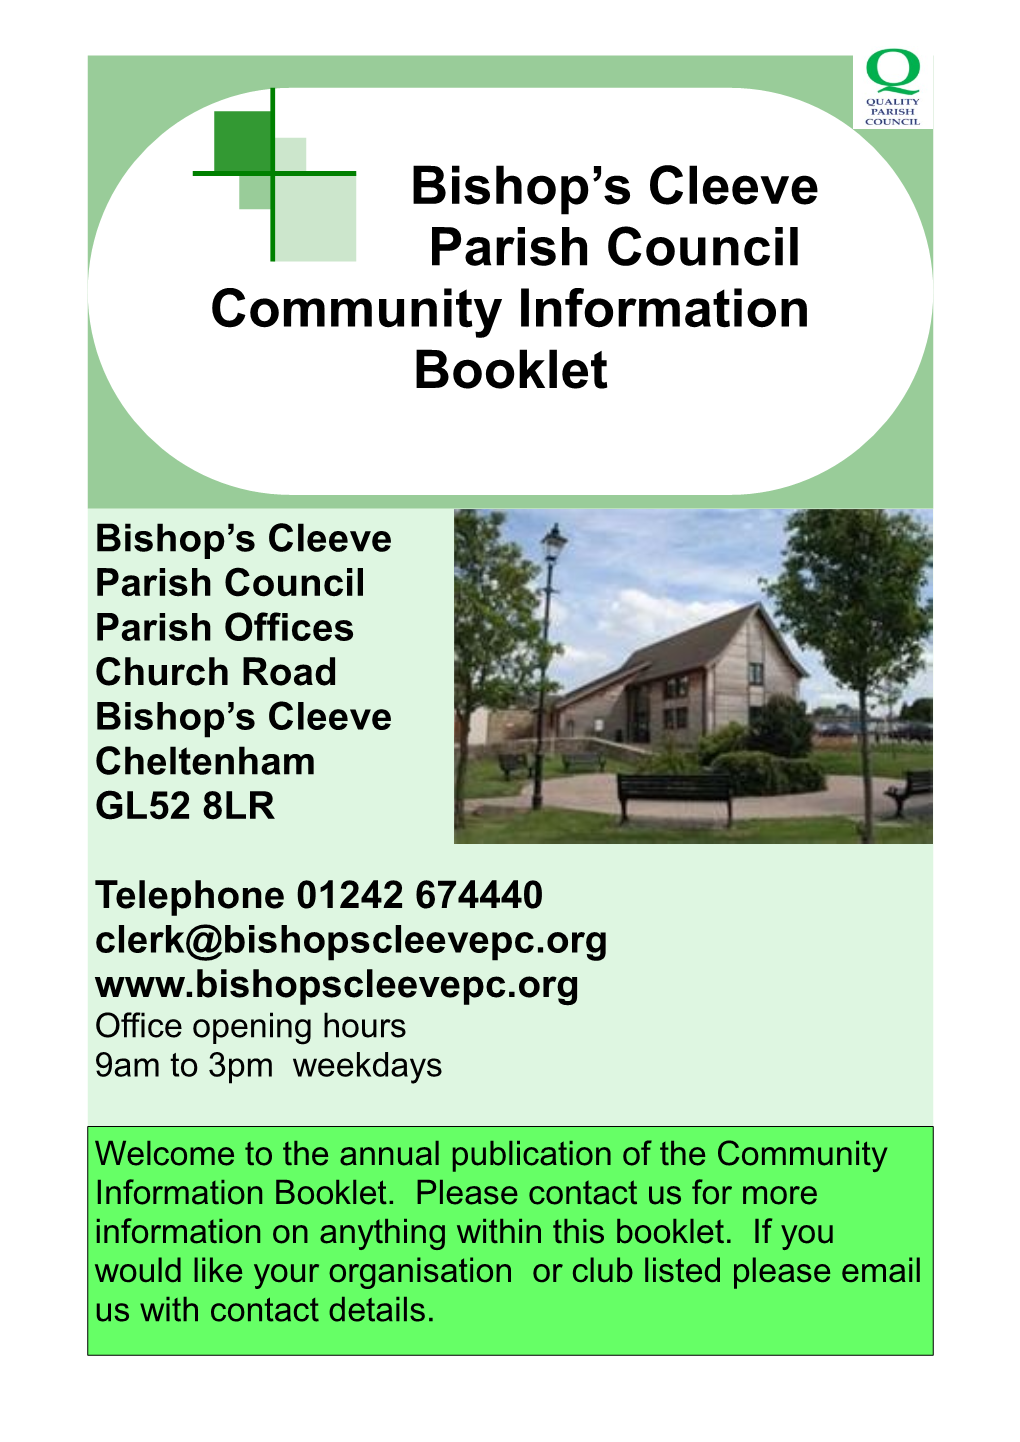 Bishop's Cleeve Parish Council Community Information Booklet